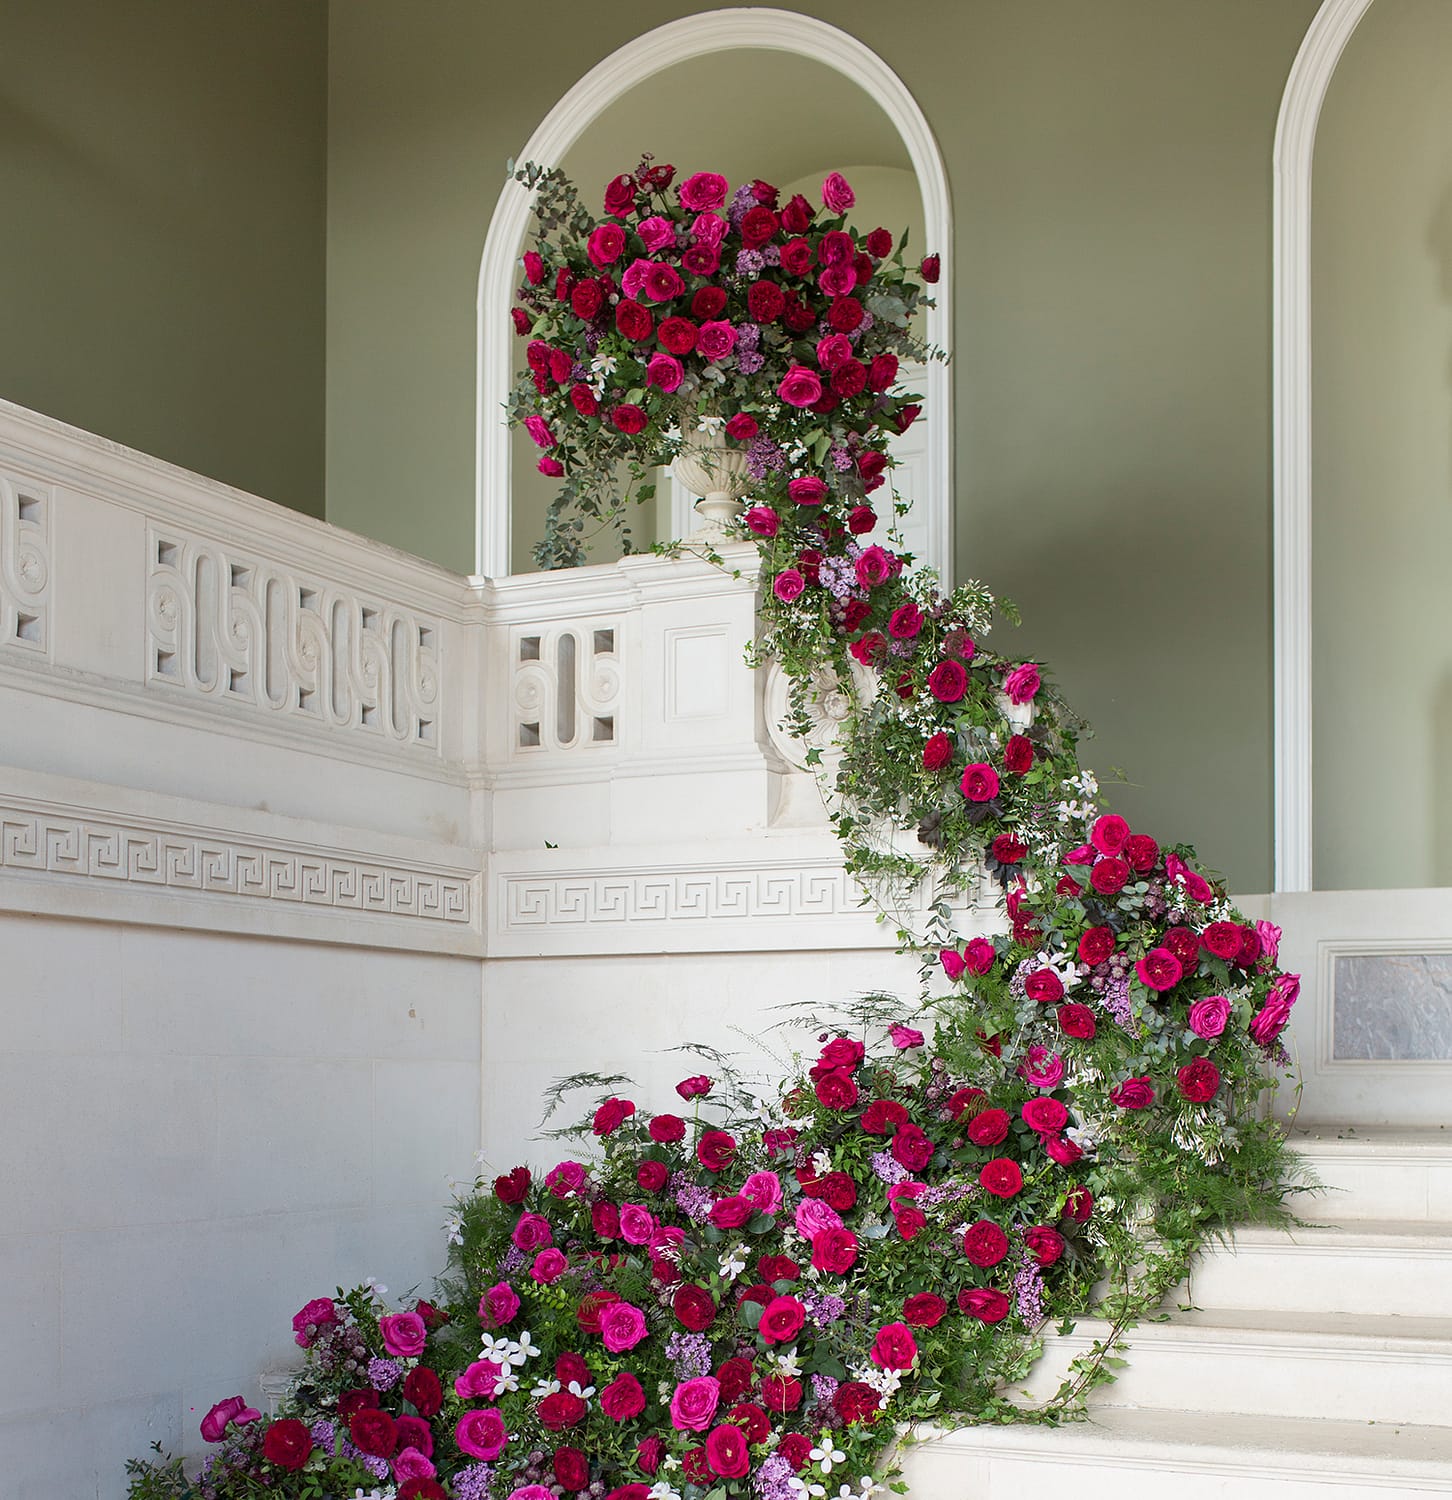 Capability roses escalier installation mariage